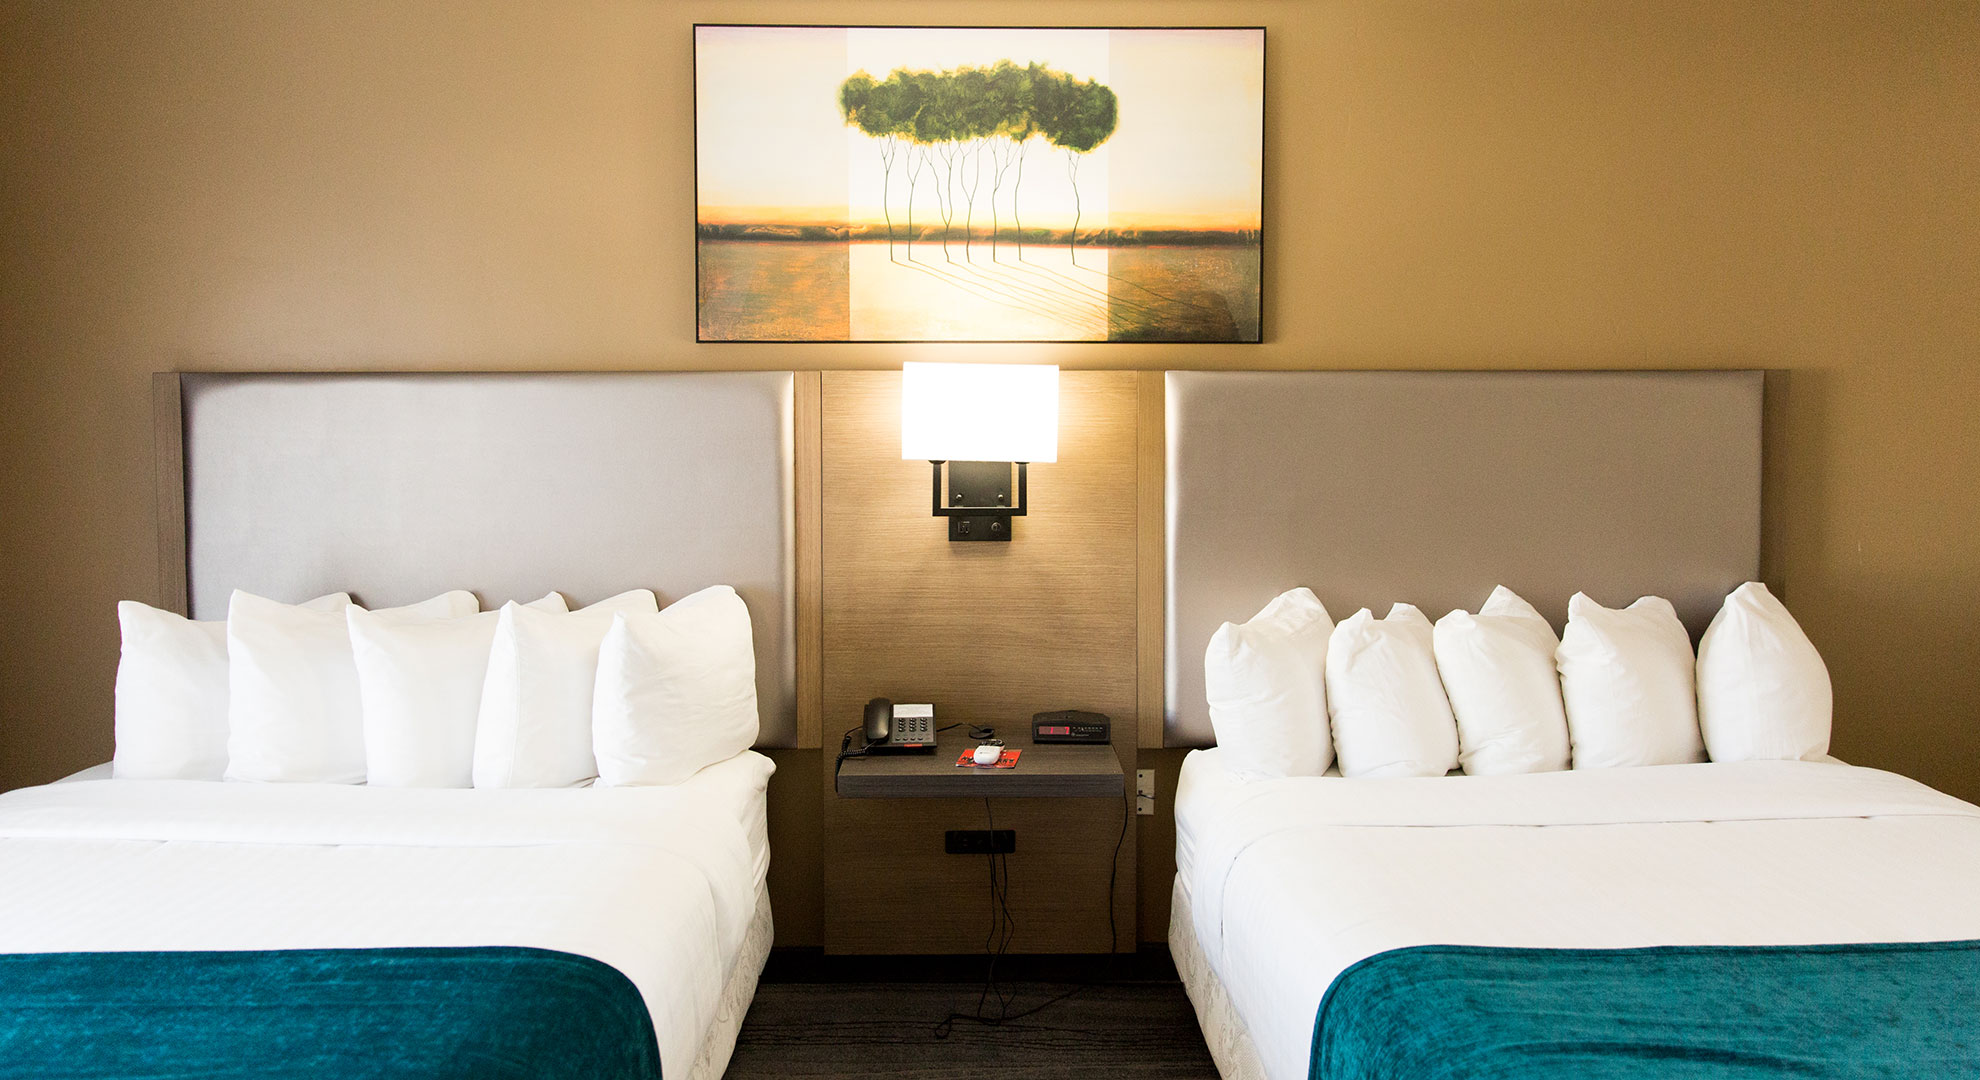 Los Viajeros Inn - Wickenburg Arizona Rooms Two Beds